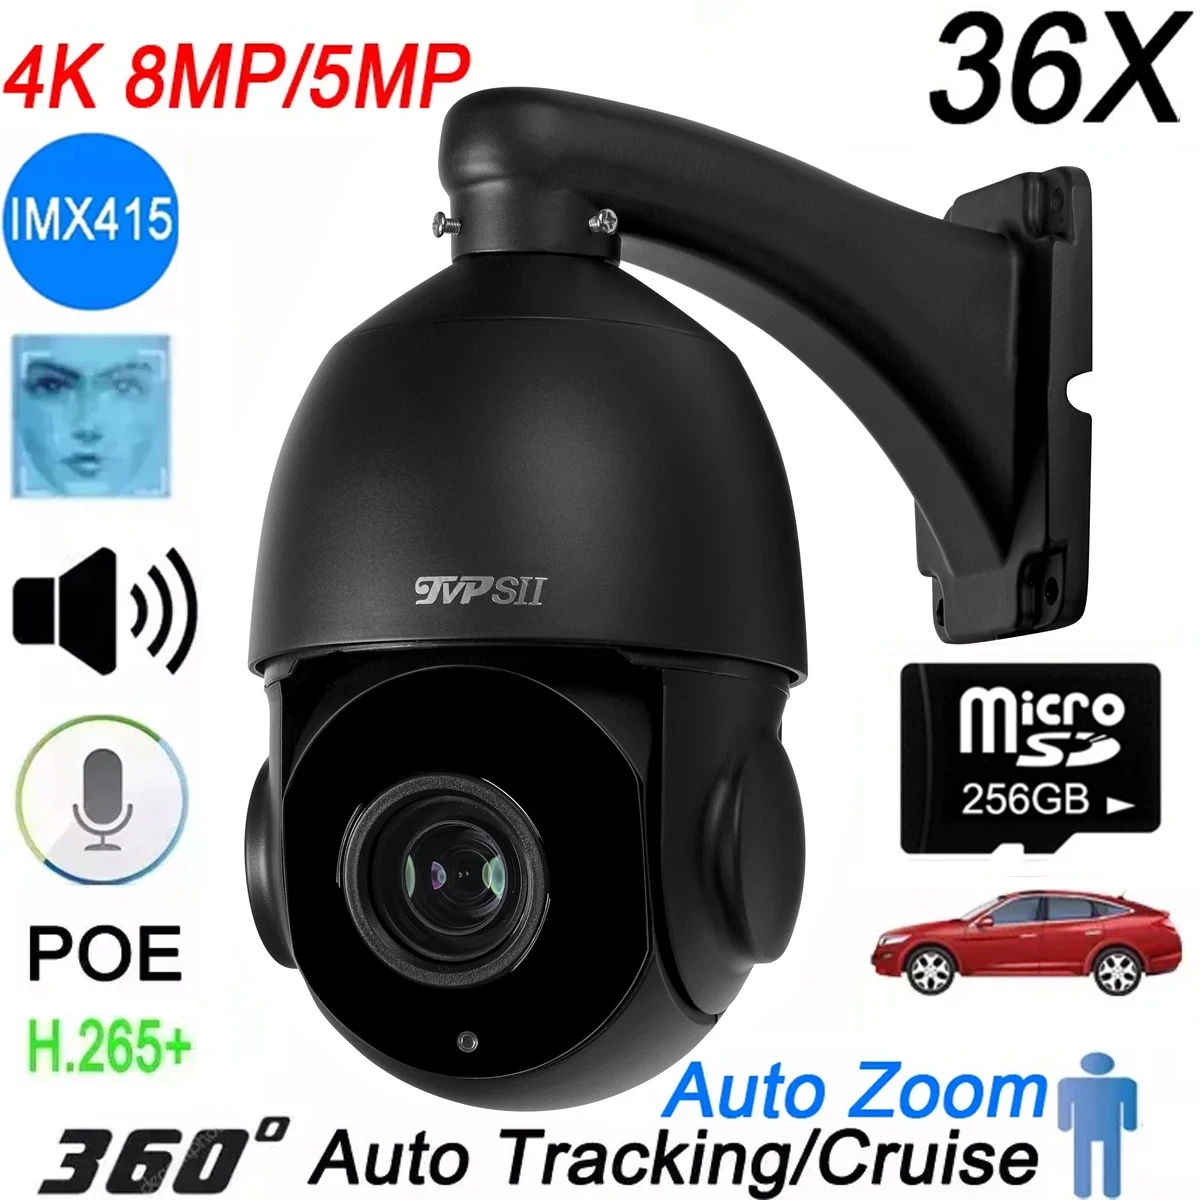 

Auto Tracking 8MP 4K IMX415 H.265+ 36X Optical Zoom 360° Rotation Audio Outdoor ONVIF POE PTZ Speed Dome Surveillance Camera